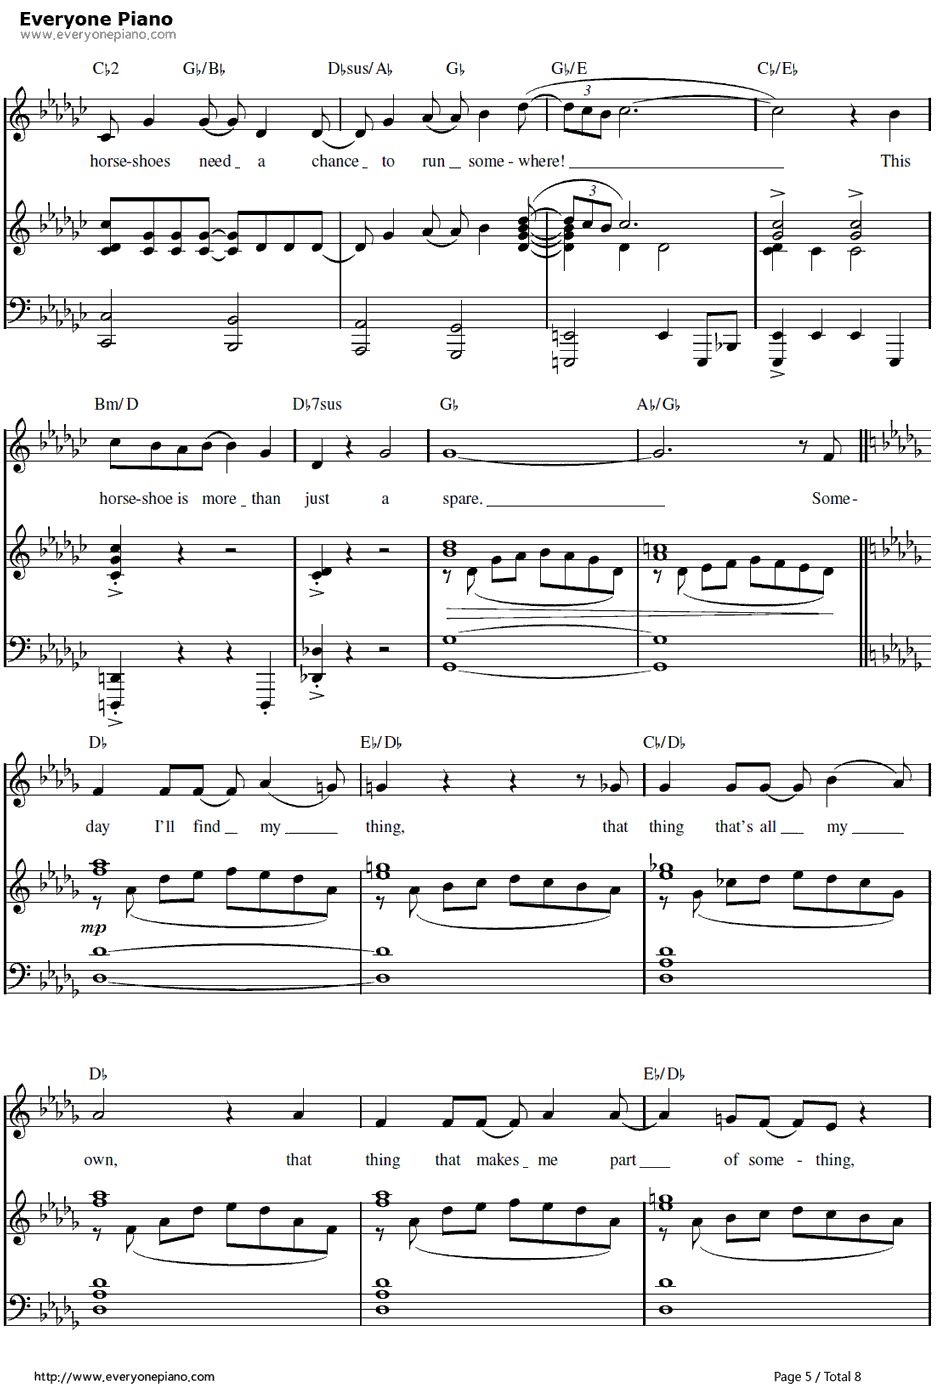 More Than Justthe Spare钢琴谱-KristenAnderson-Lopez&RobertLopez-冰雪奇缘插曲5